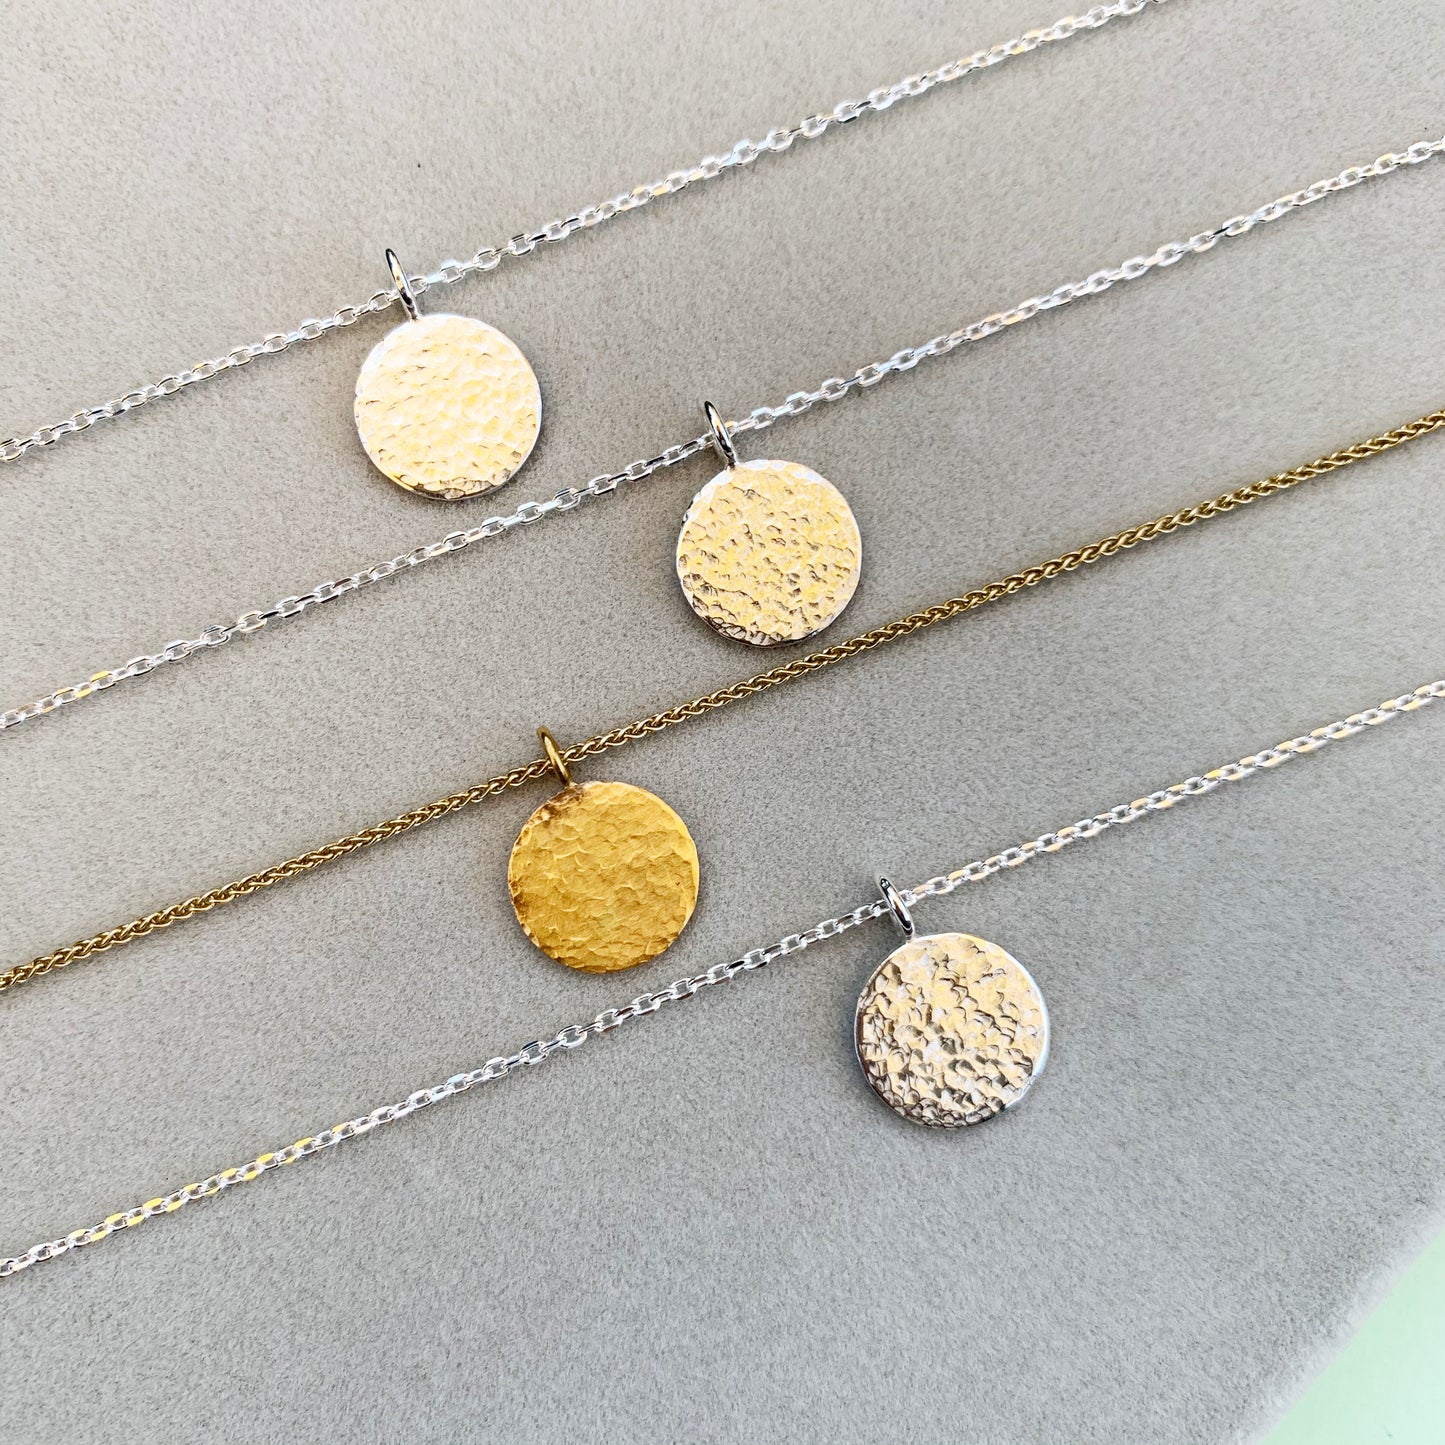 9ct gold polished ripple pendant, polished gold pendant, 9ct yellow gold necklace, yellow gold necklace, 9ct gold pendant necklace